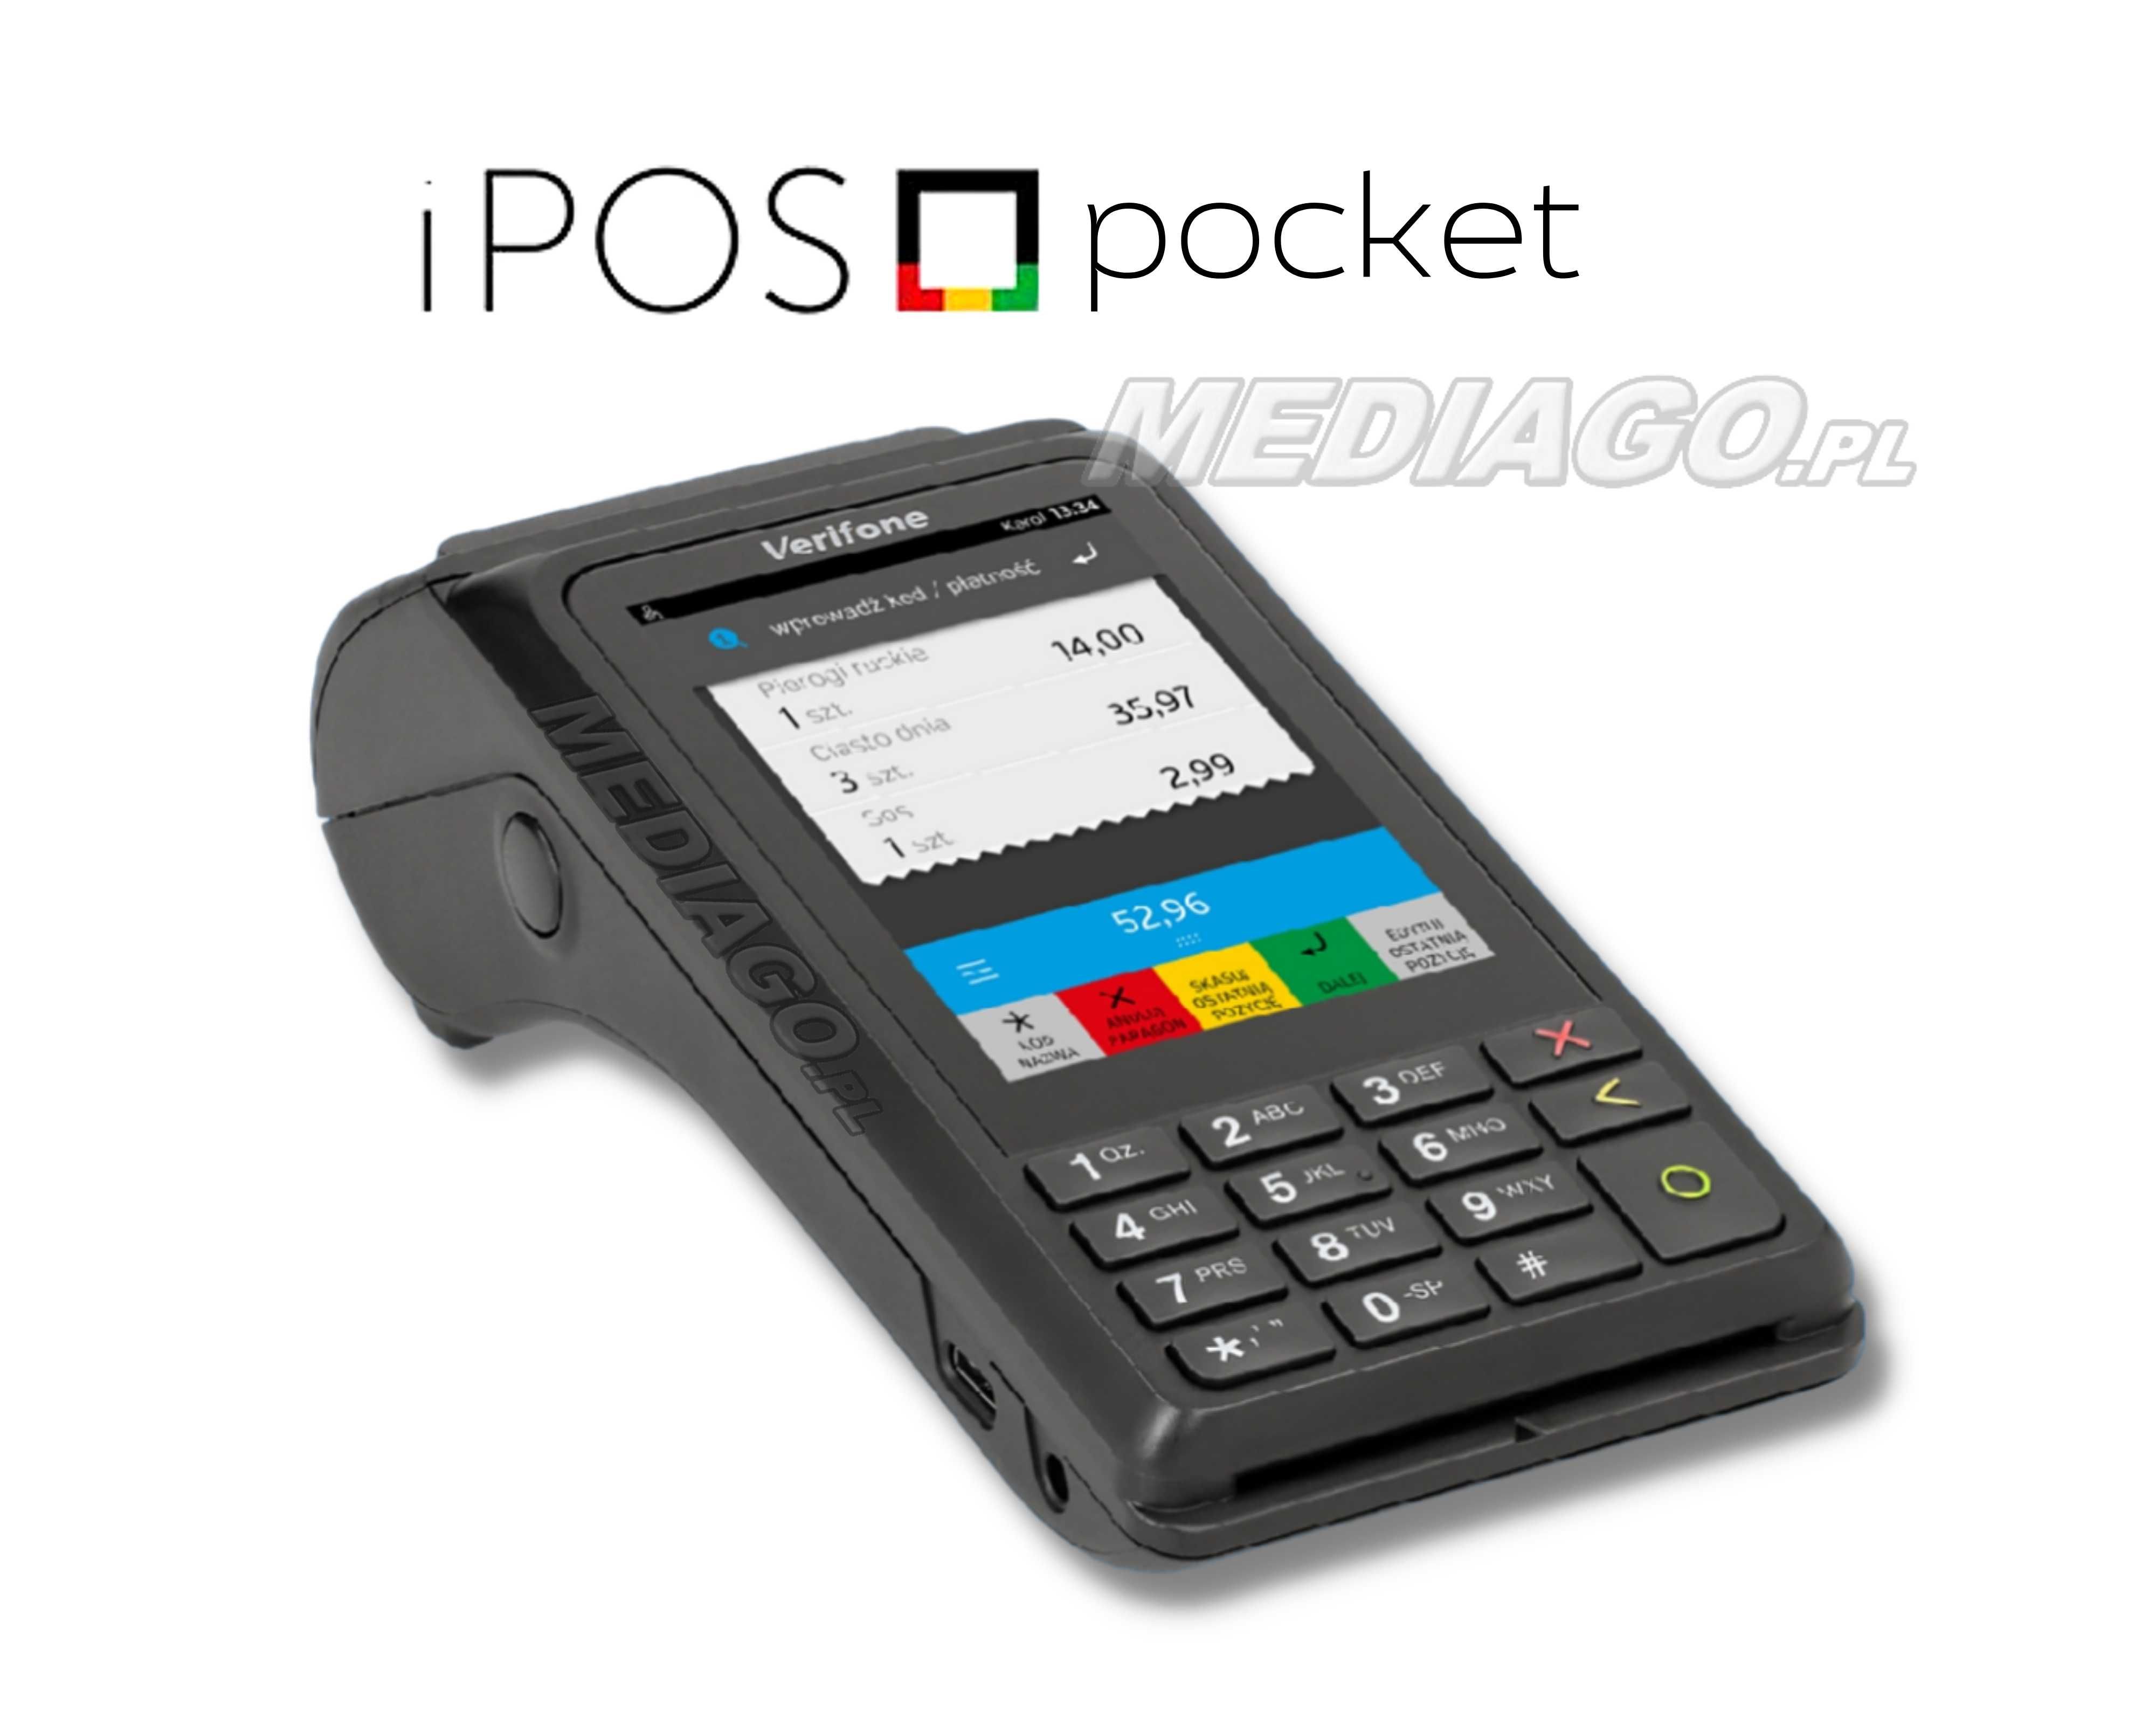 iPOS pocket mobilny kasoterminal fiskalna kasa wirtualna terminal